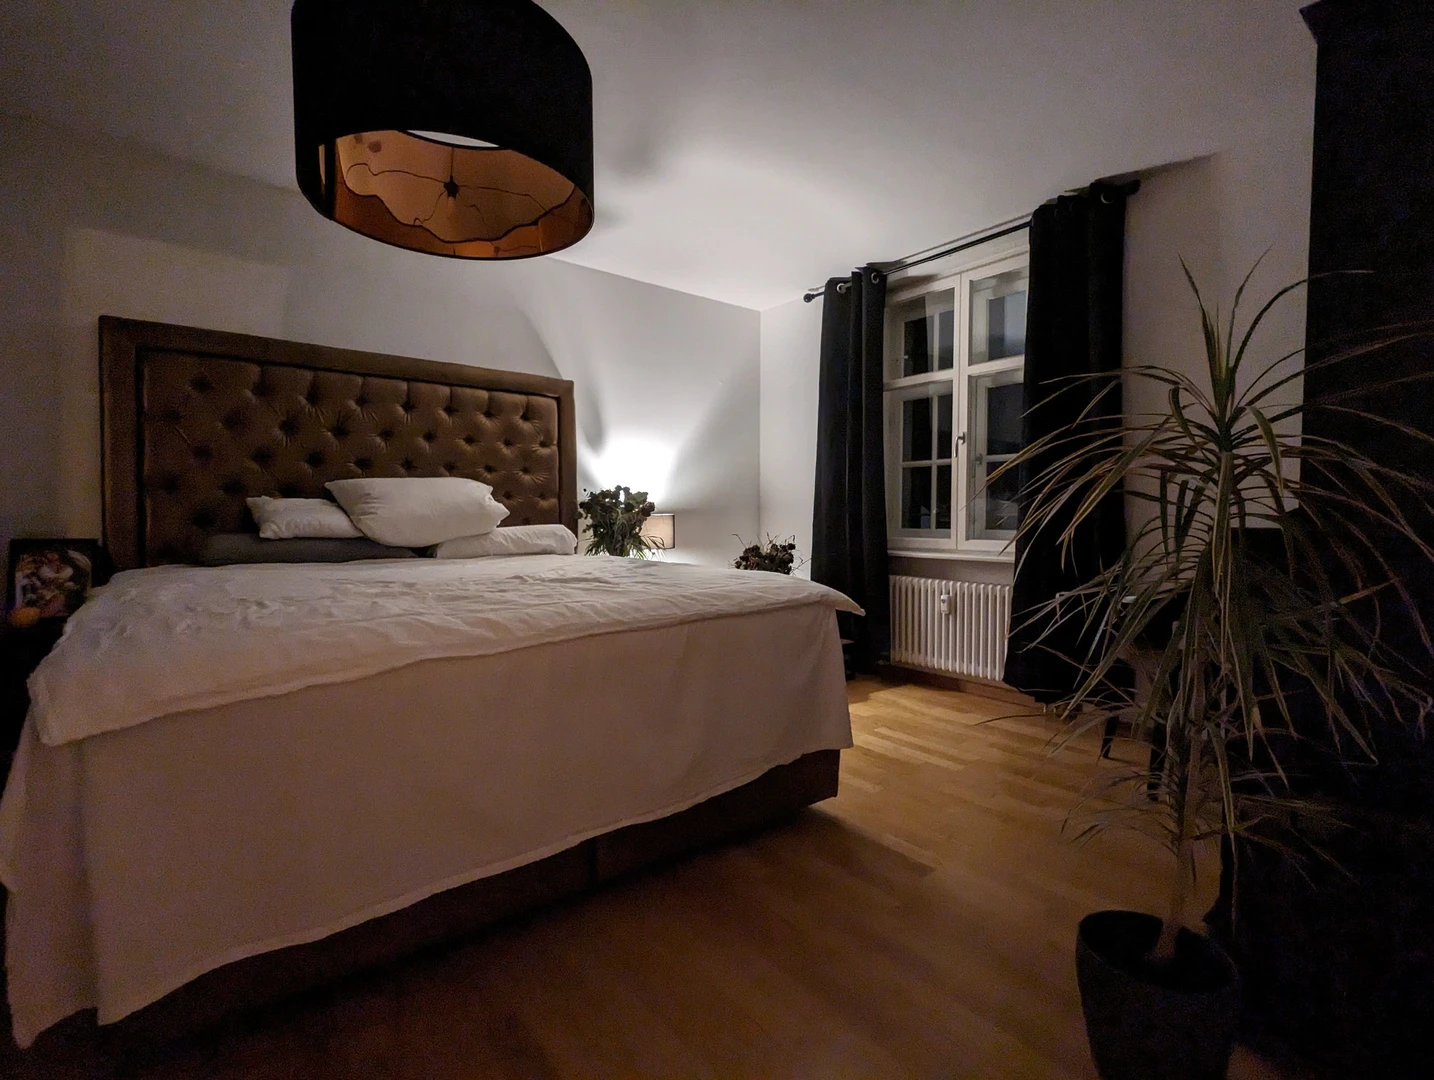 Chambre individuelle lumineuse à Regensburg